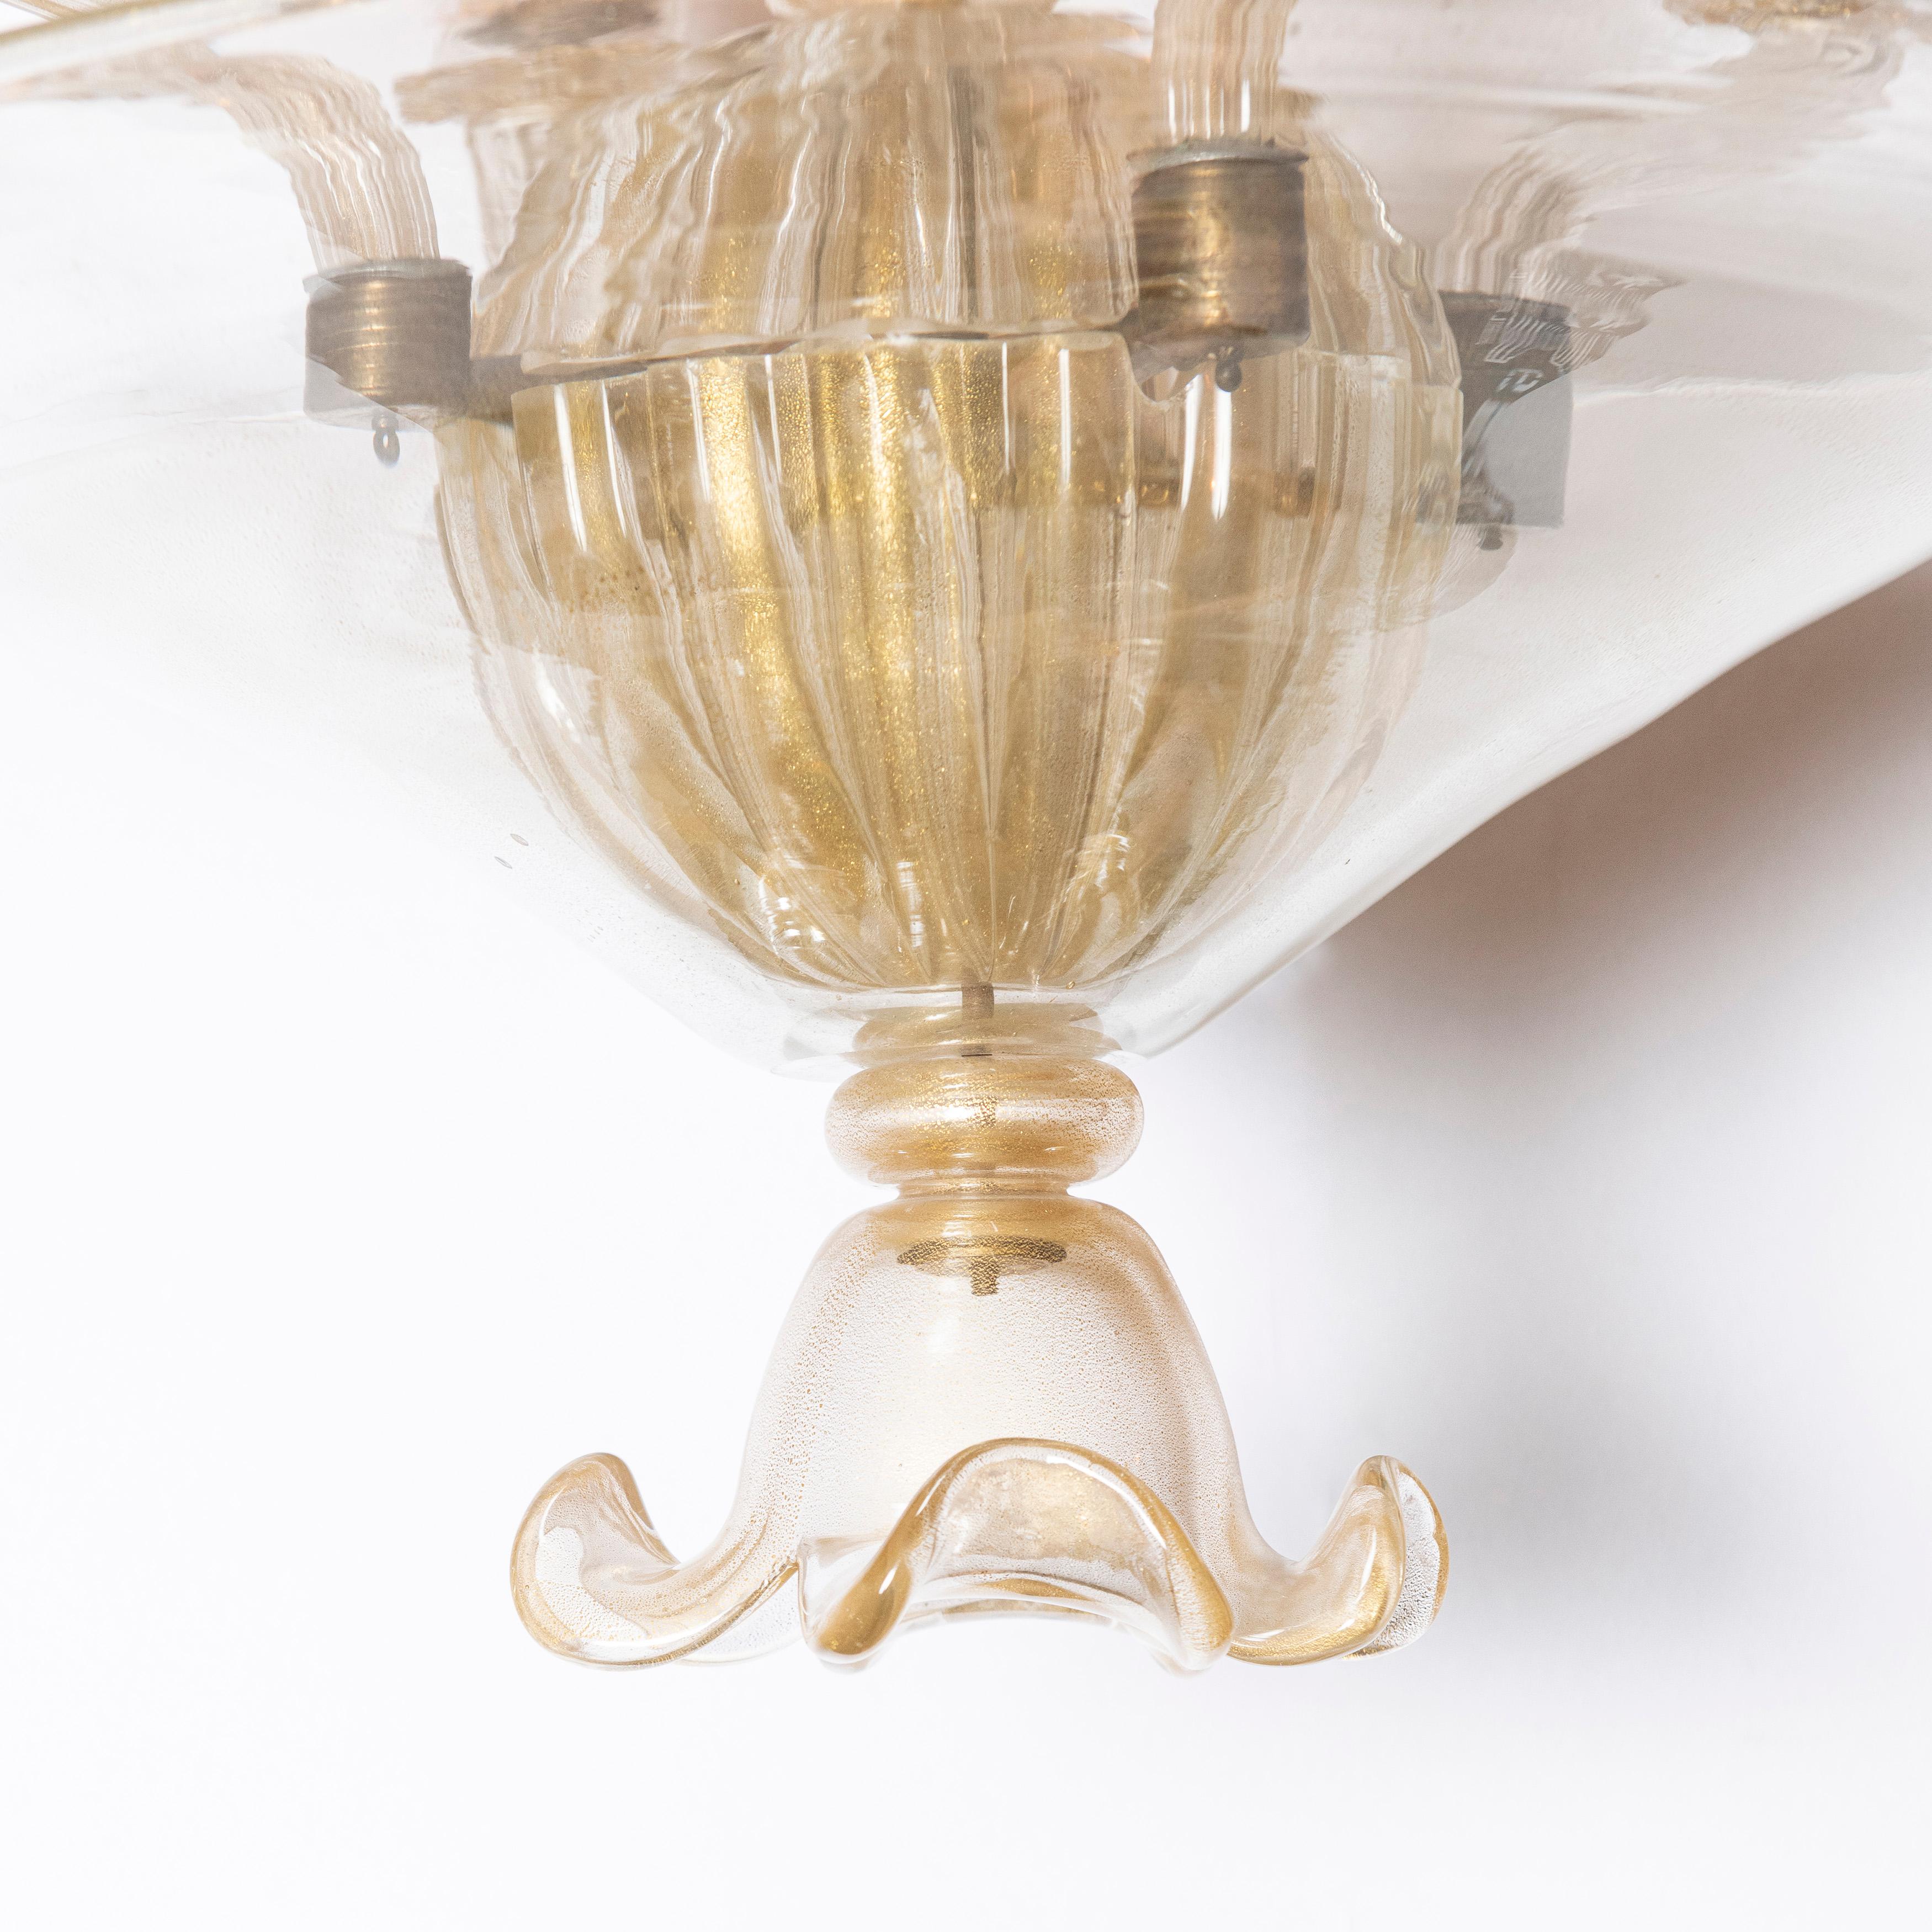 Lustre en verre de Murano avec inclusions d'or de Barovier & Toso, Italie, vers 1950.
Quatre lumières.